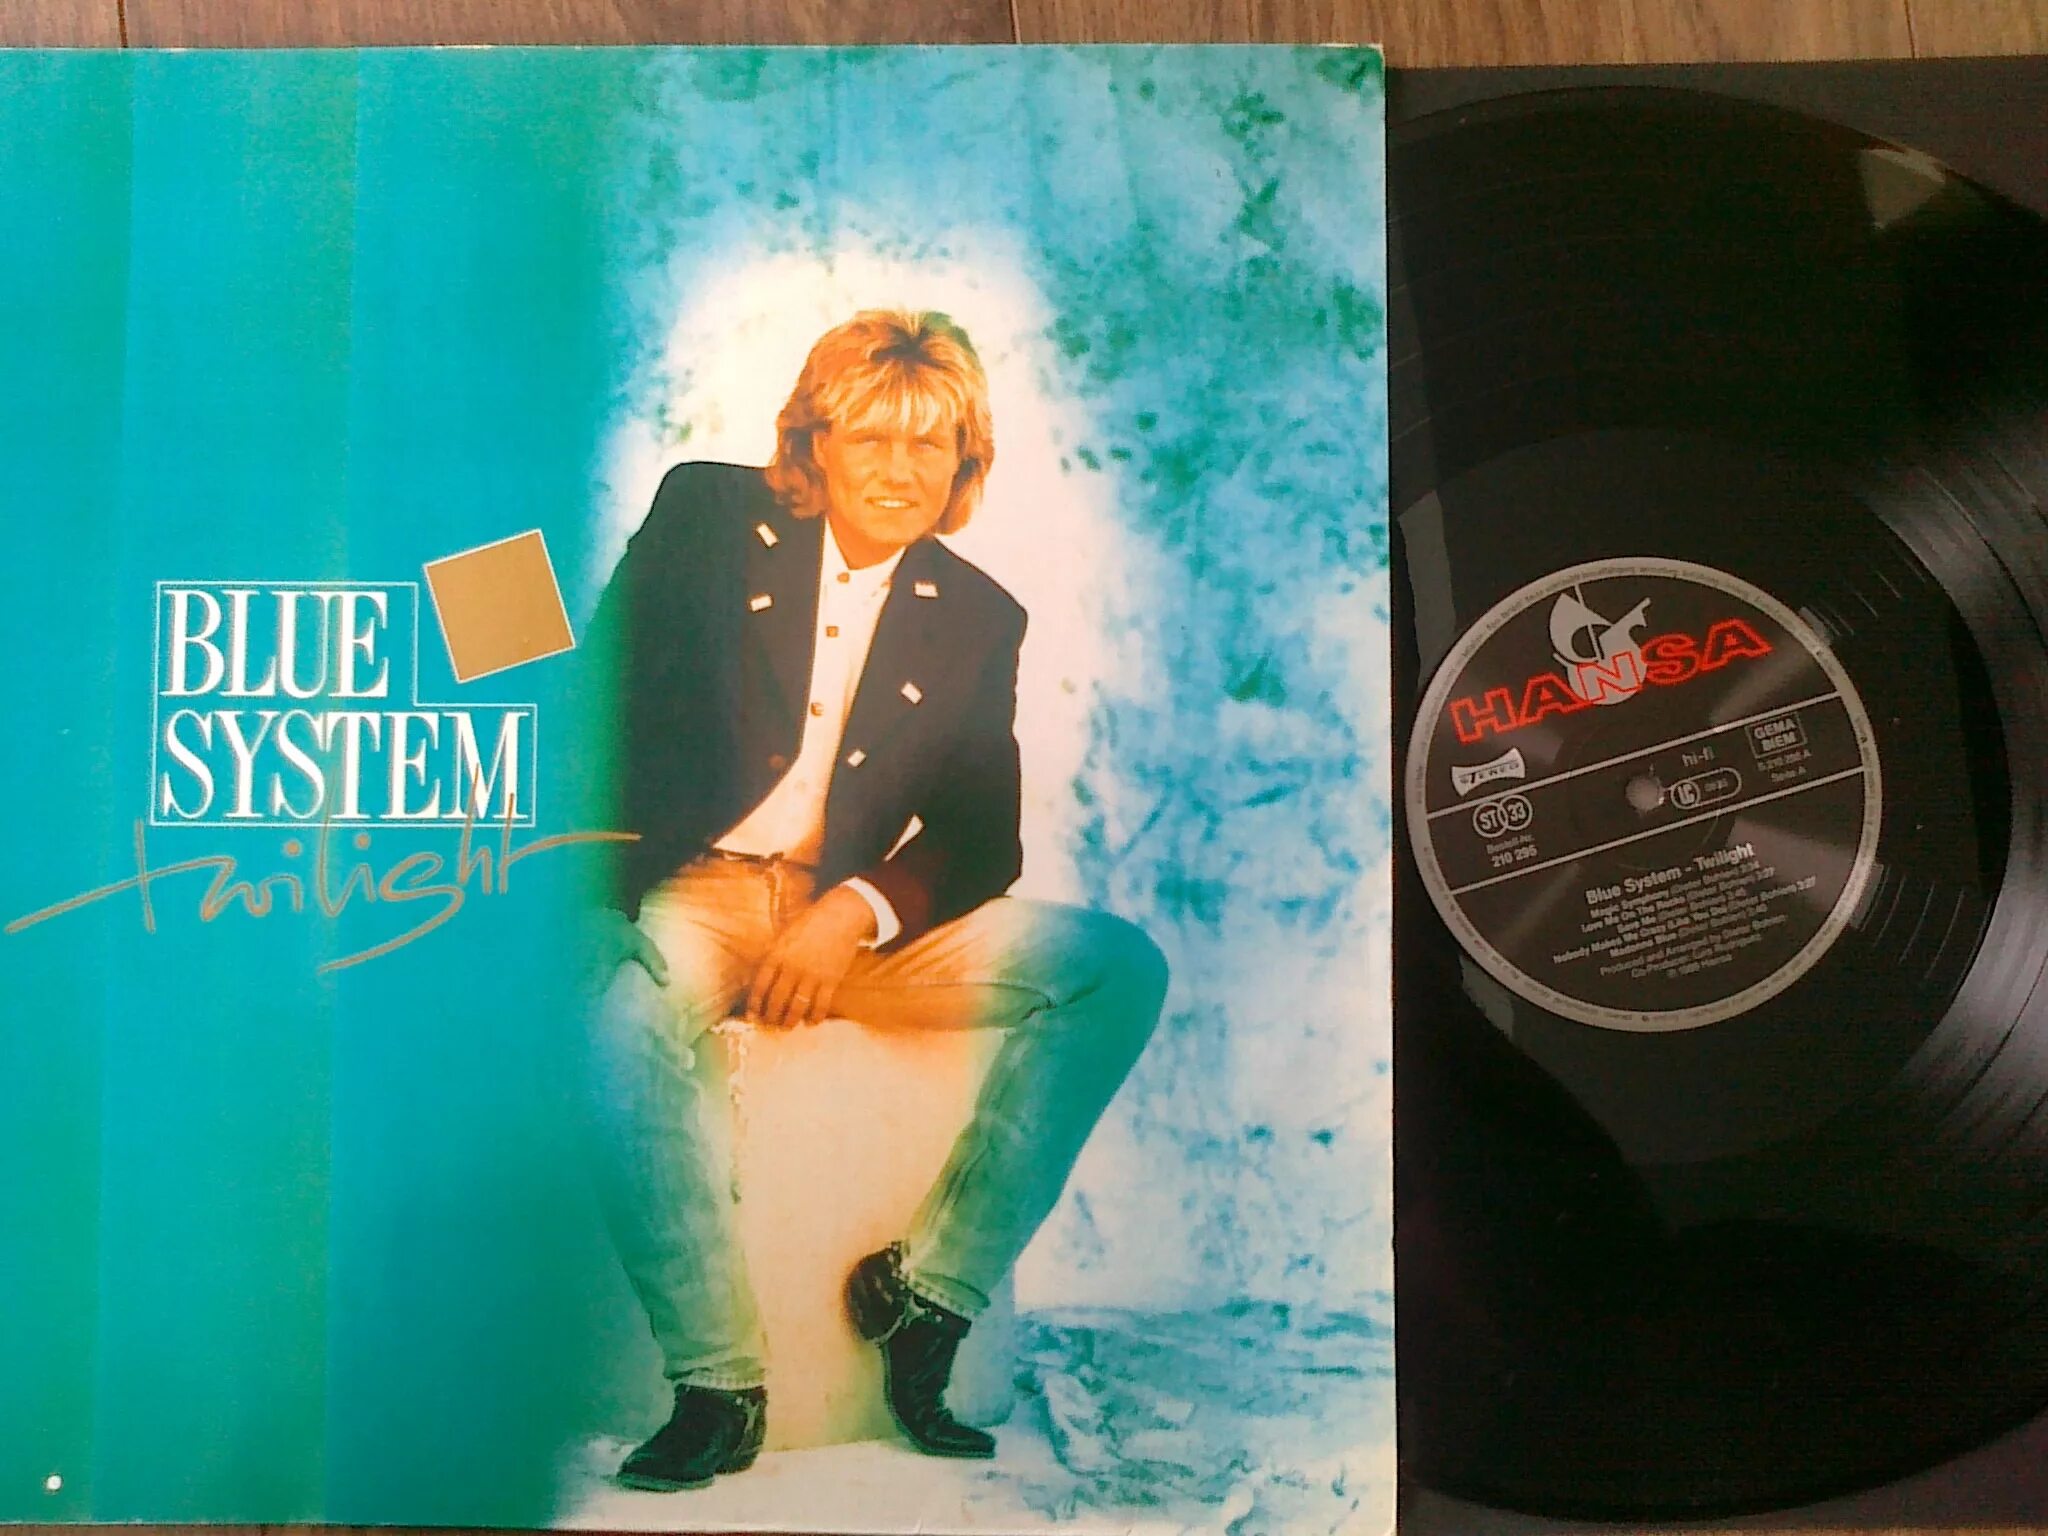 Blue system little system. Blue System Twilight 1989. Blue System – Twilight (LP). Blue System Twilight обложка. Blue System - Twilight пластинка.